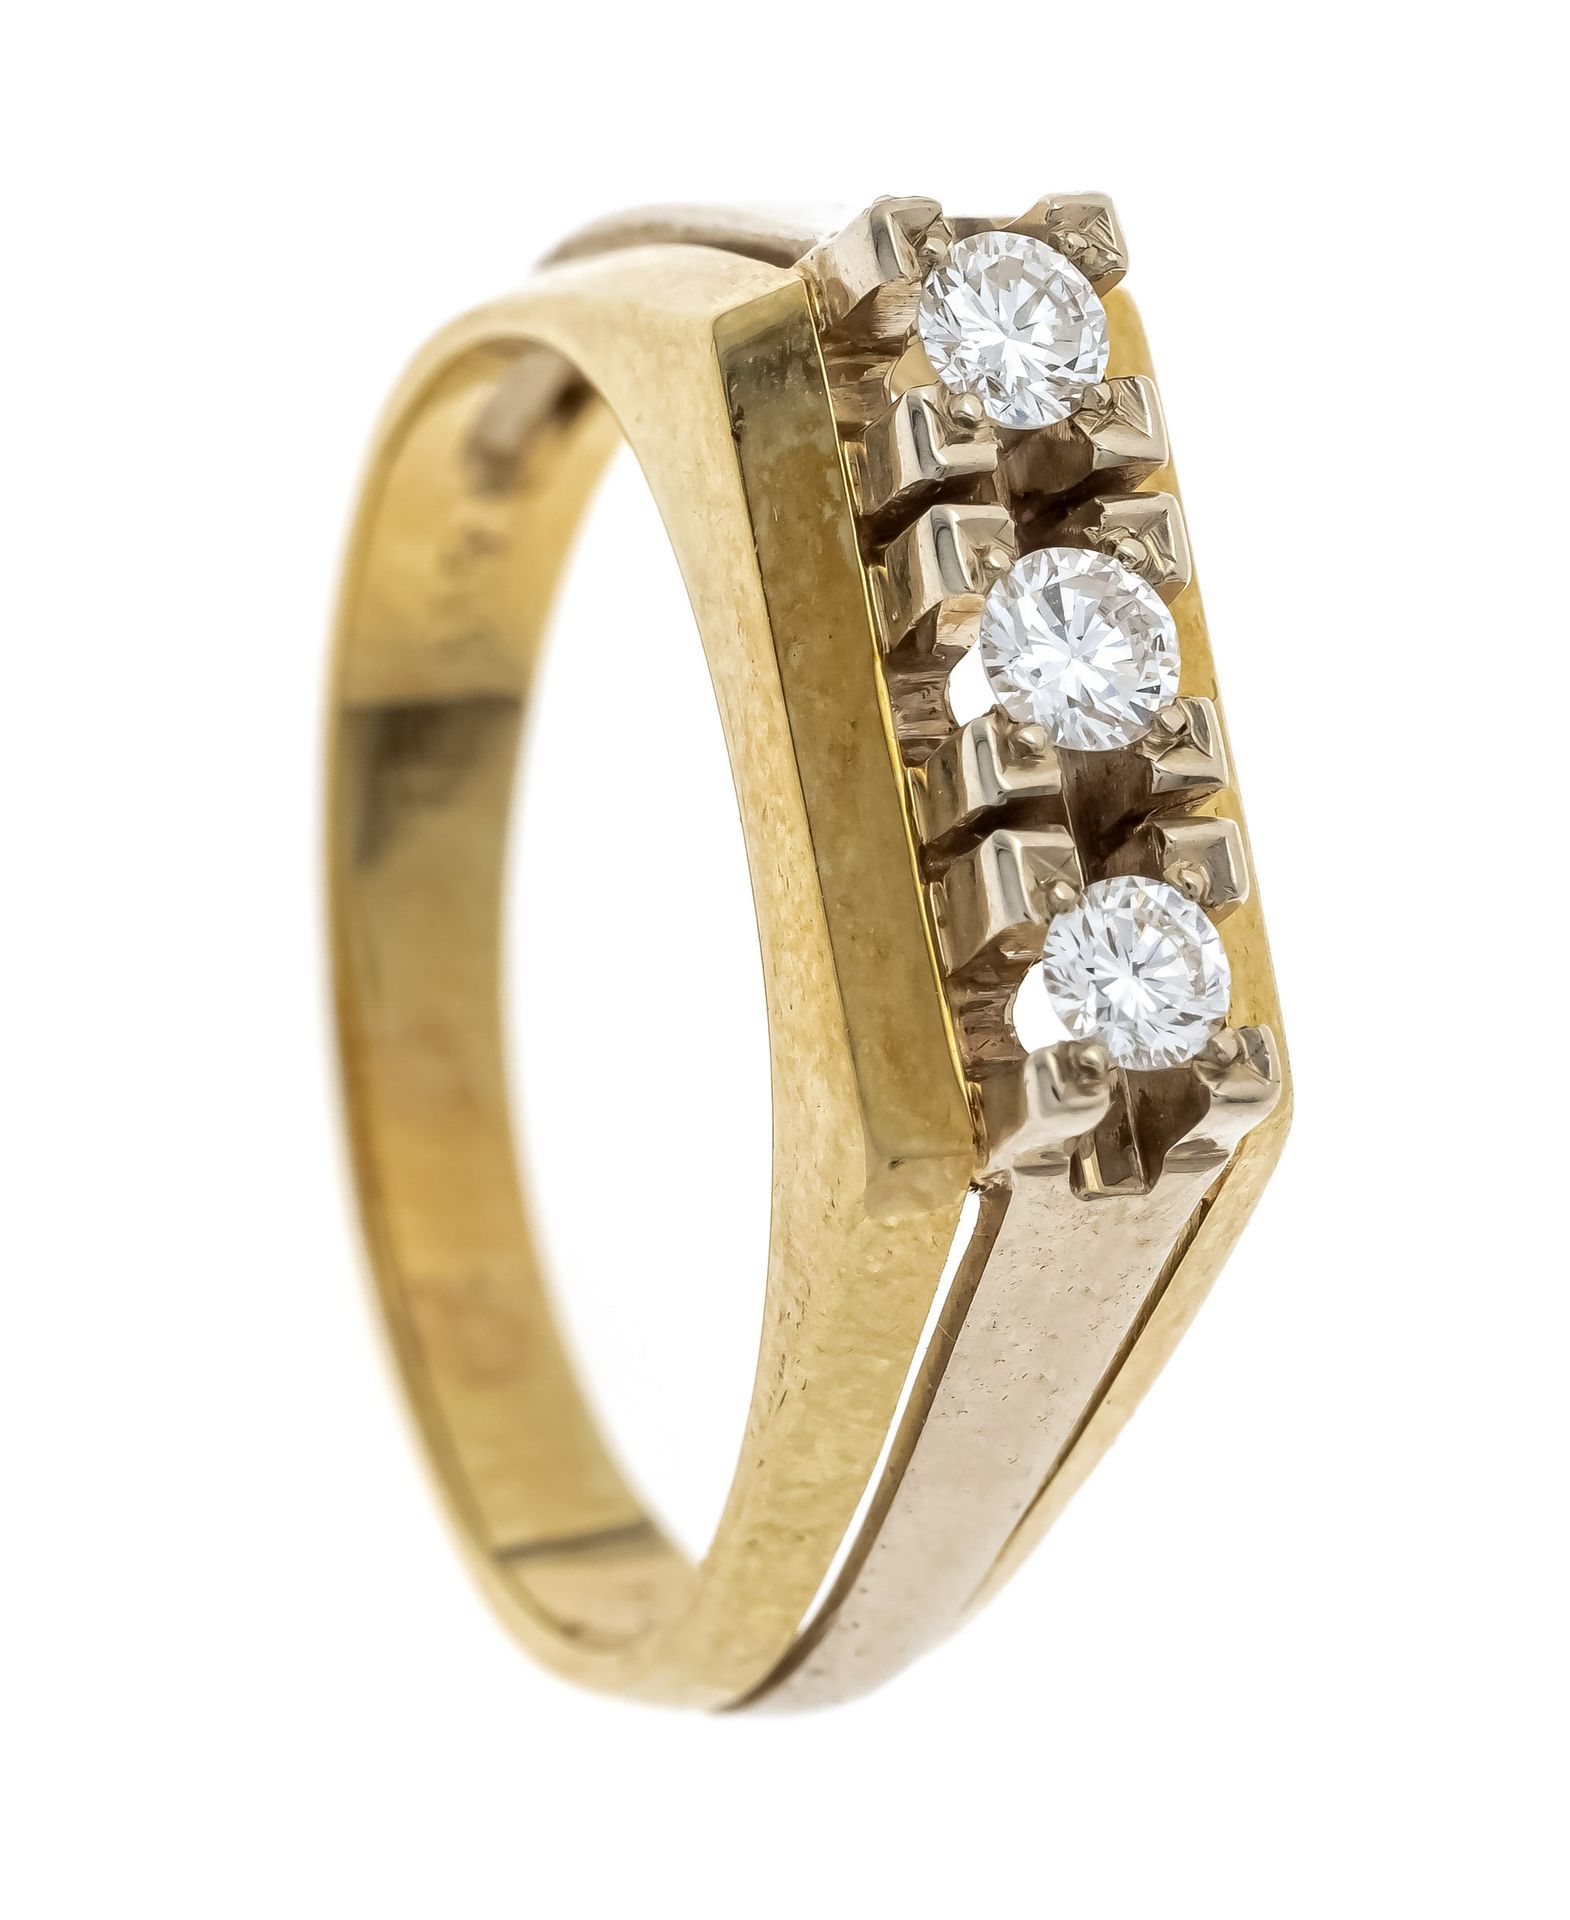 Null 明亮的戒指GG/WG 585/000，镶有3颗明亮式切割钻石，增加。0.28克拉 TW-W/VS-SI, RG 60, 6.4克